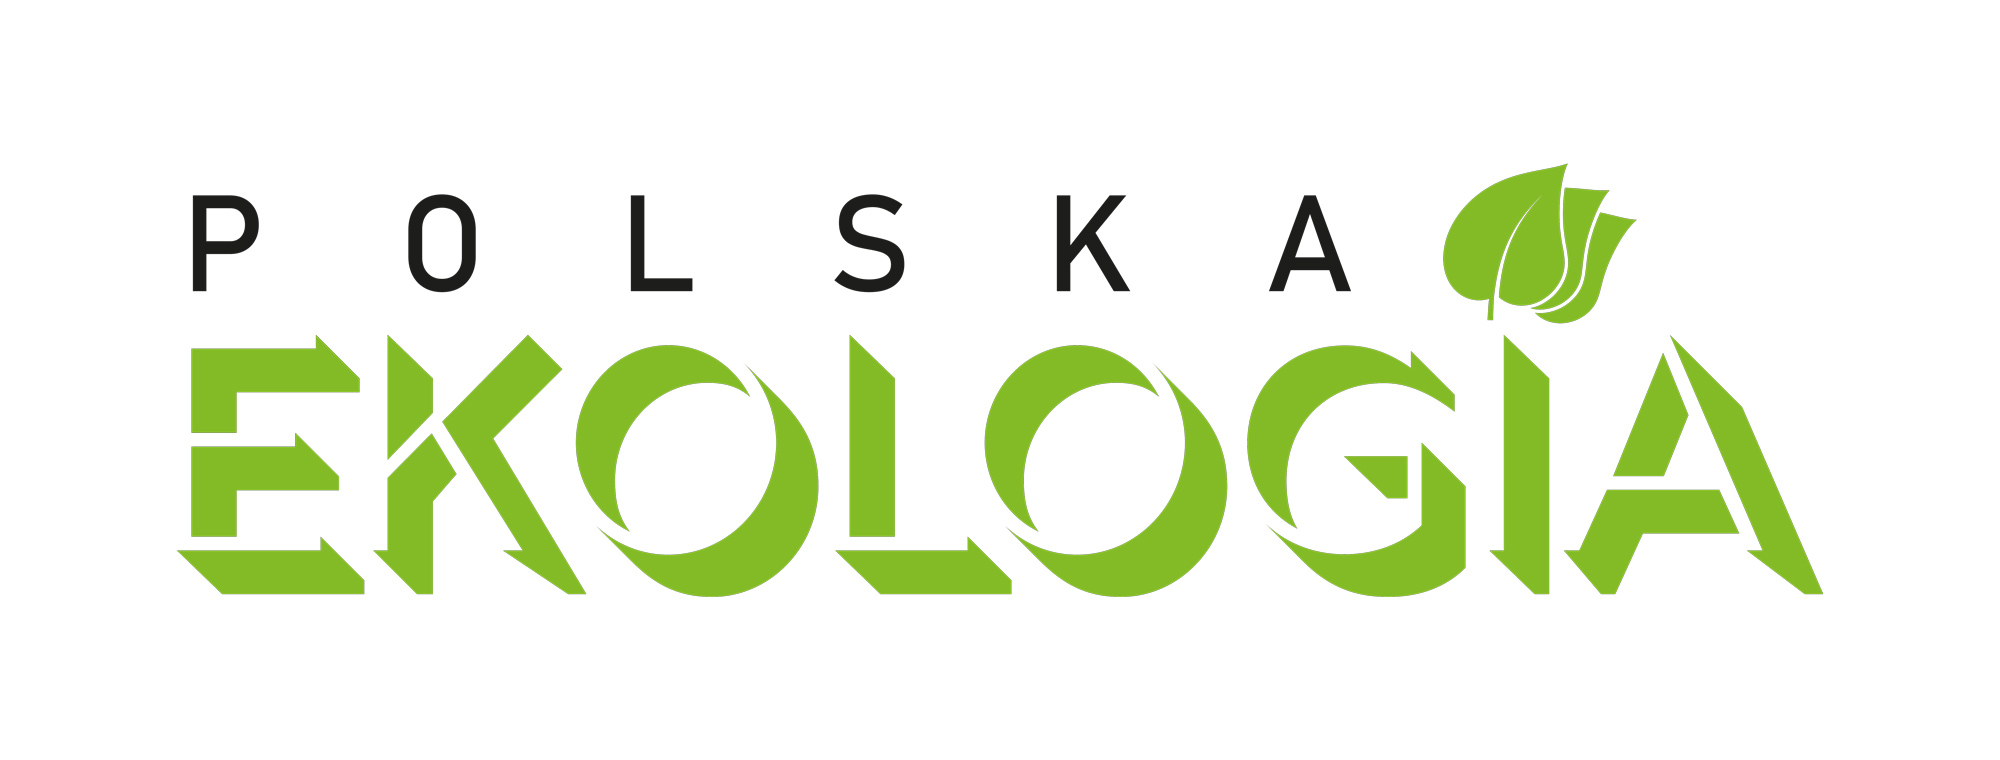 Portal ekologiczny - Polska Ekologia